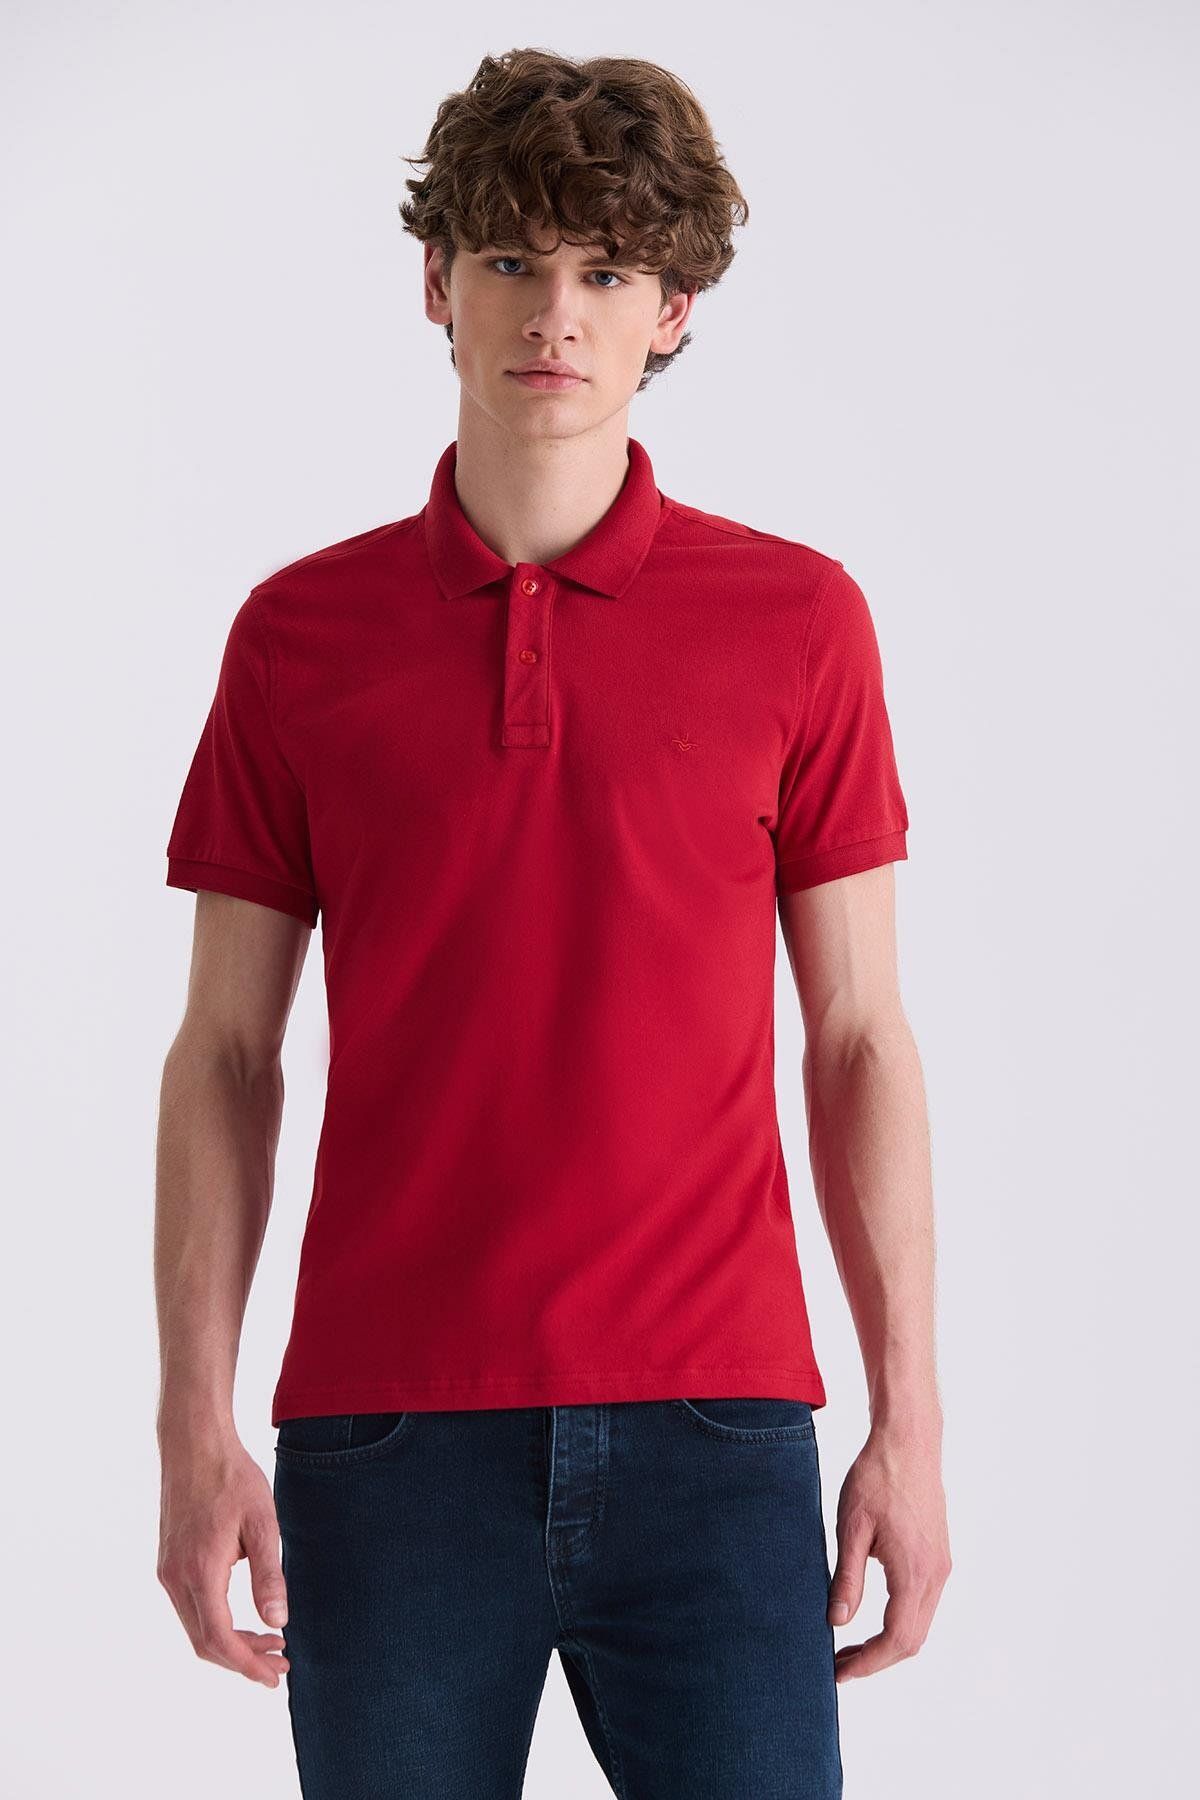 Jakamen Kırmızı Slim Fit Polo Yaka T-Shirt